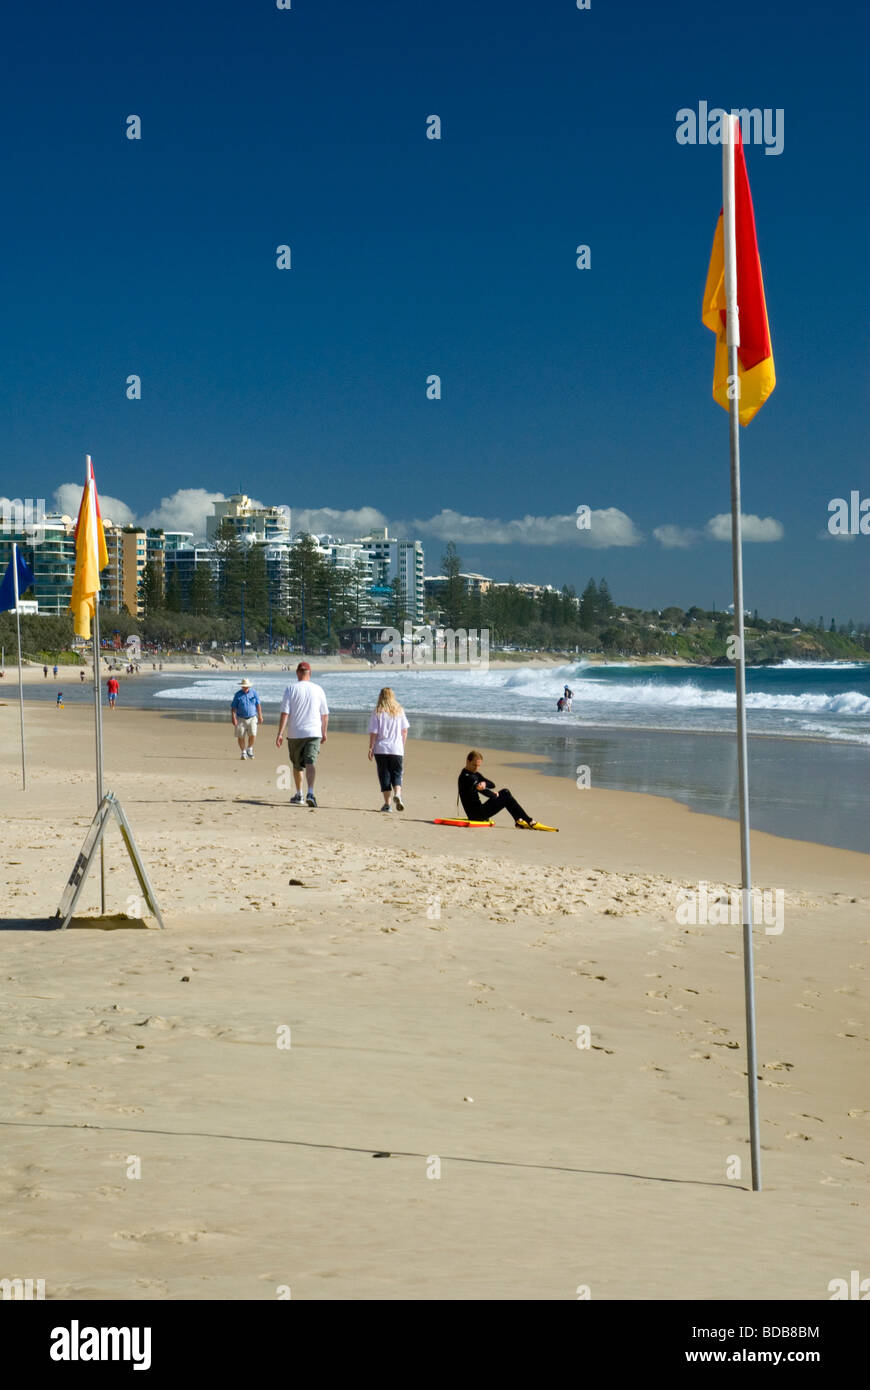 Volunteer lifesavers' safety zone flags at Mooloolaba Sunshine Coast Queensland Australia Stock Photo